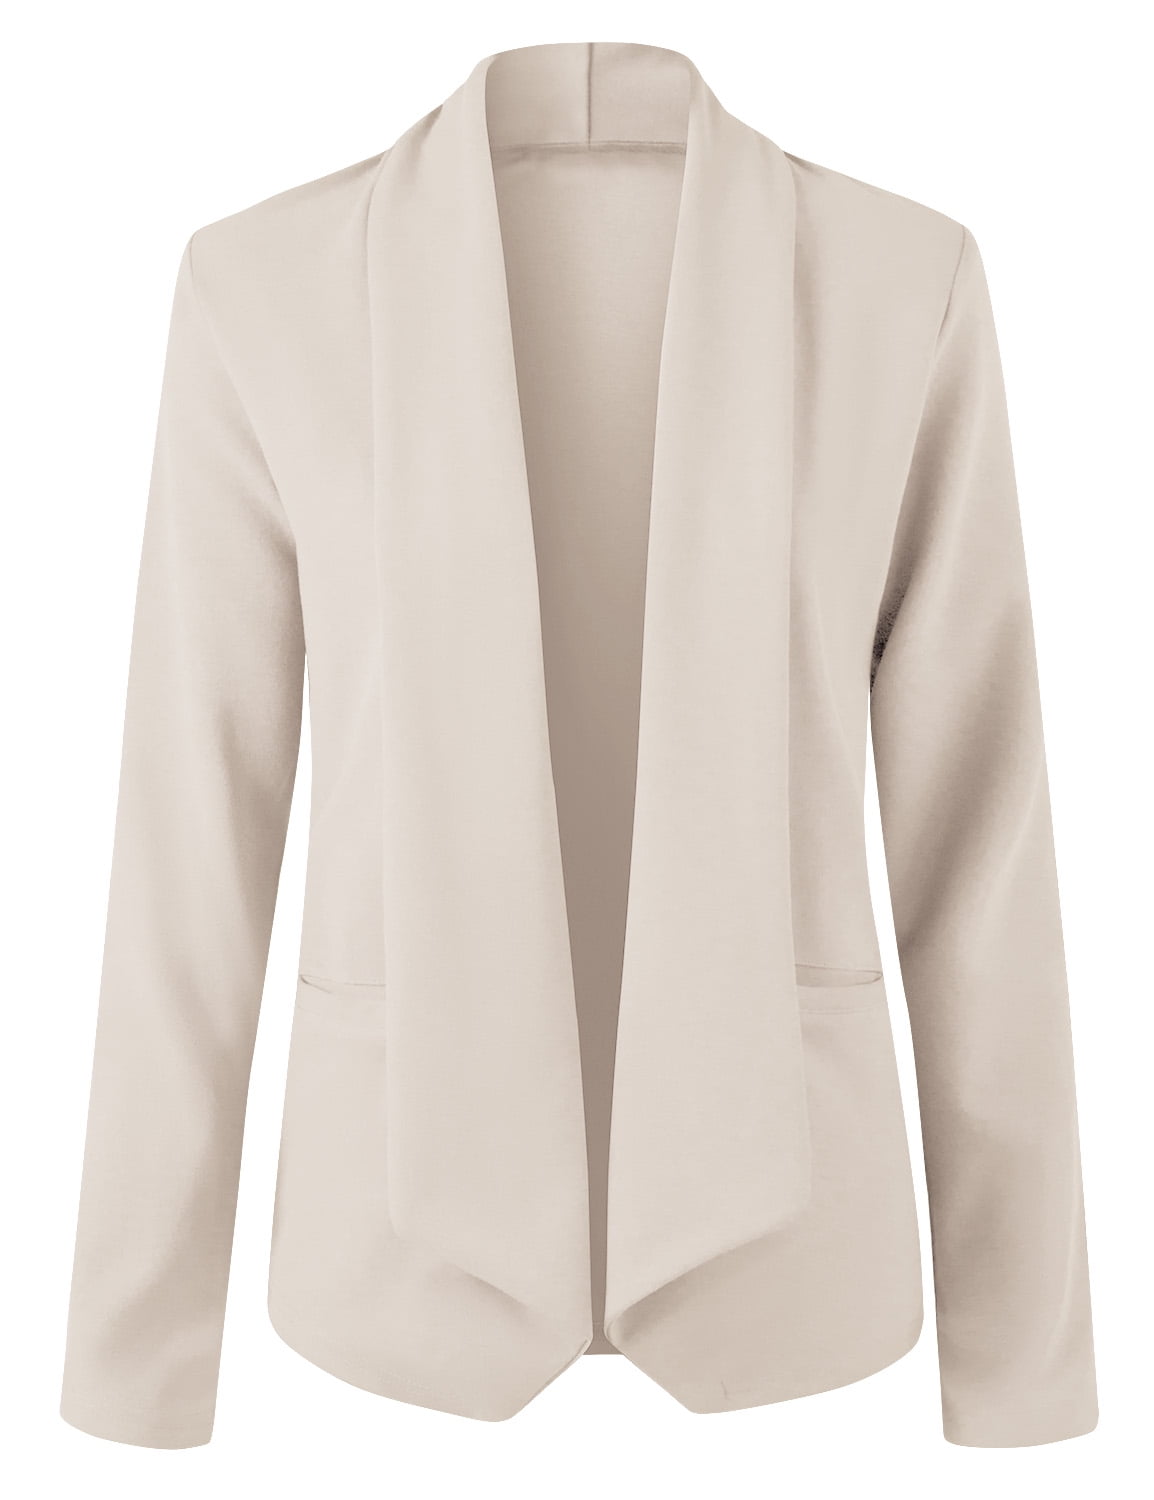 DOUBLJU Womens Long Sleeve Cardigan Lightweight Open Front Office Blazer with Plus Size 